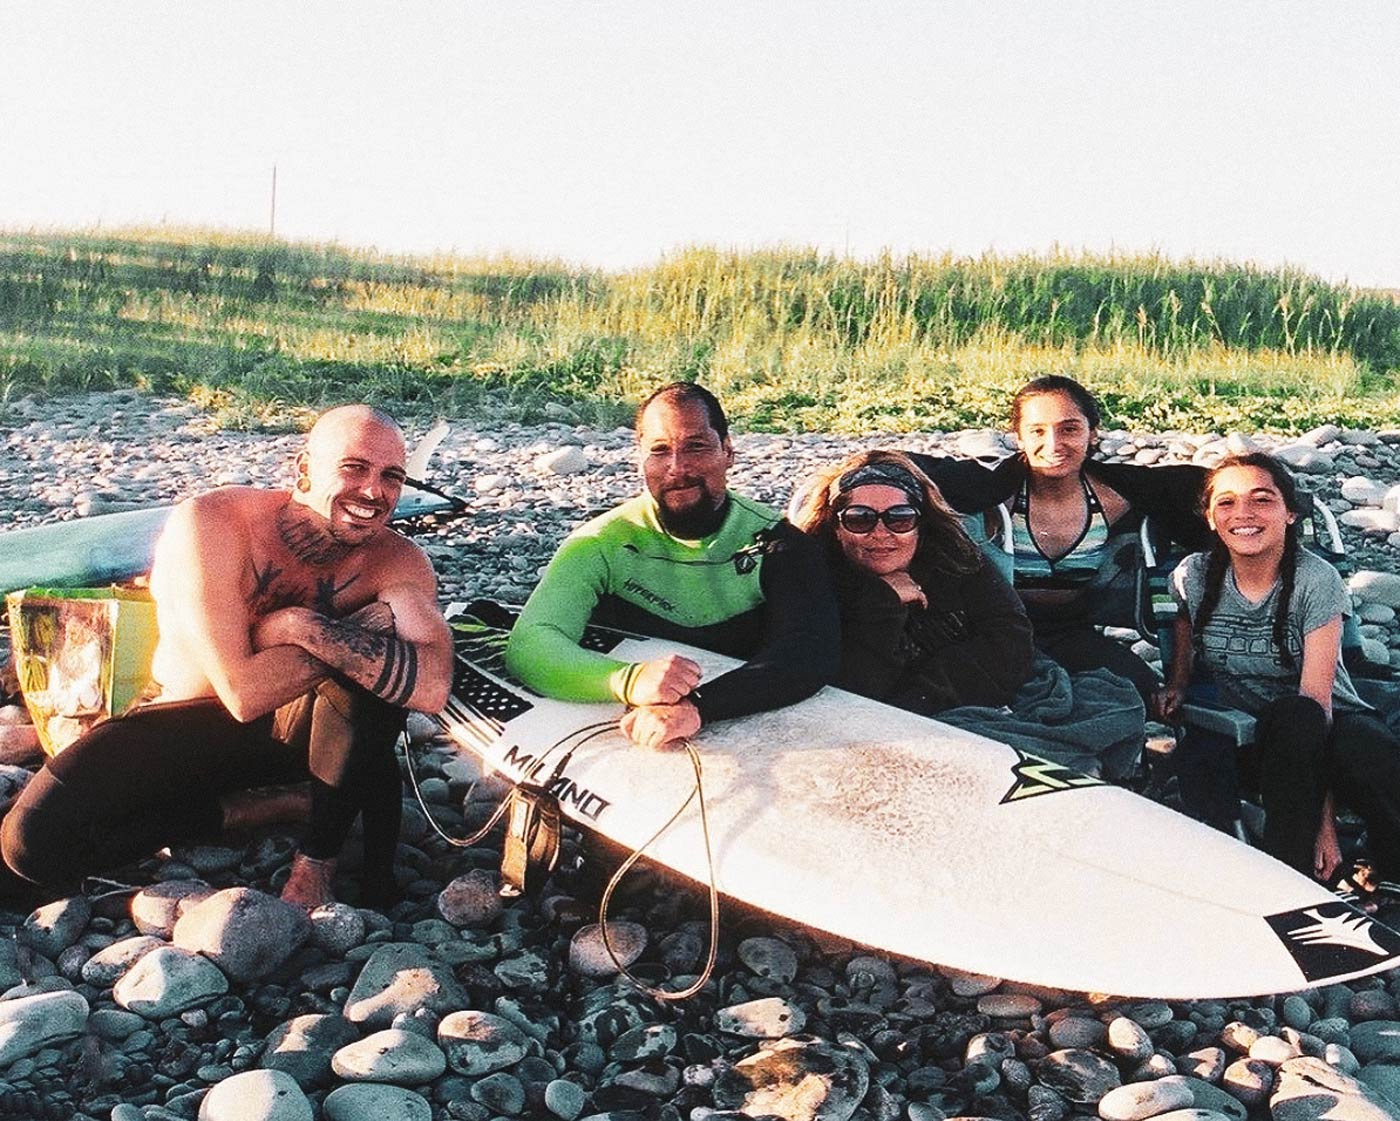 Larry Cavero and his family surfing in Nova Scotia